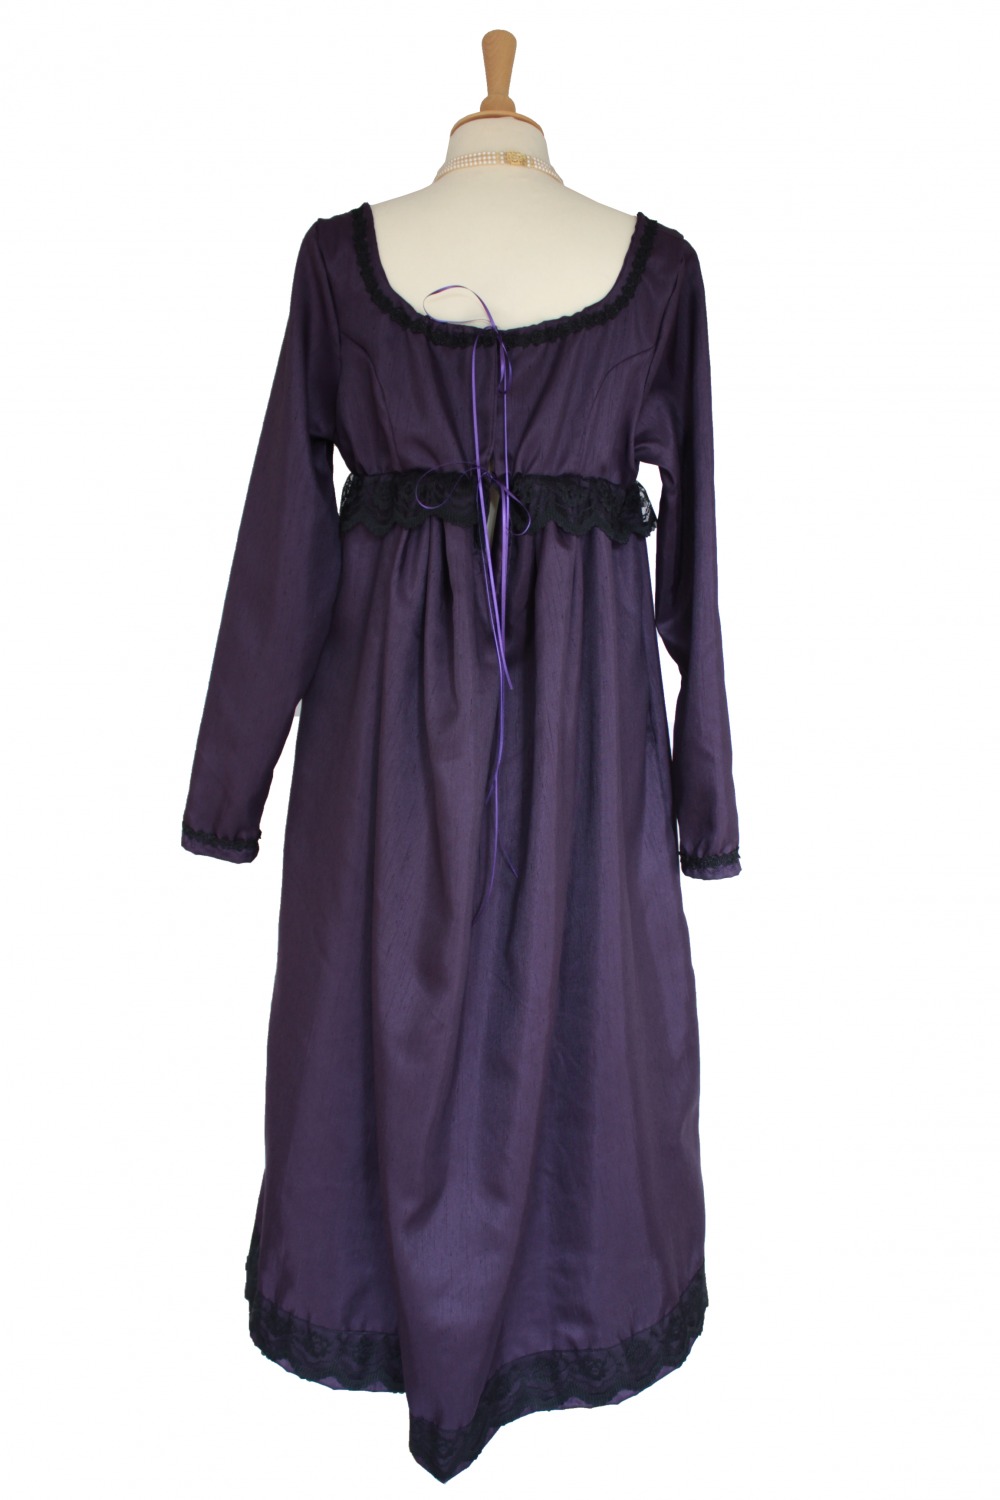 Ladies 18th 19th Regency Jane Austen Costume Evening Ball Gown Petite Size 16 - 18 Image